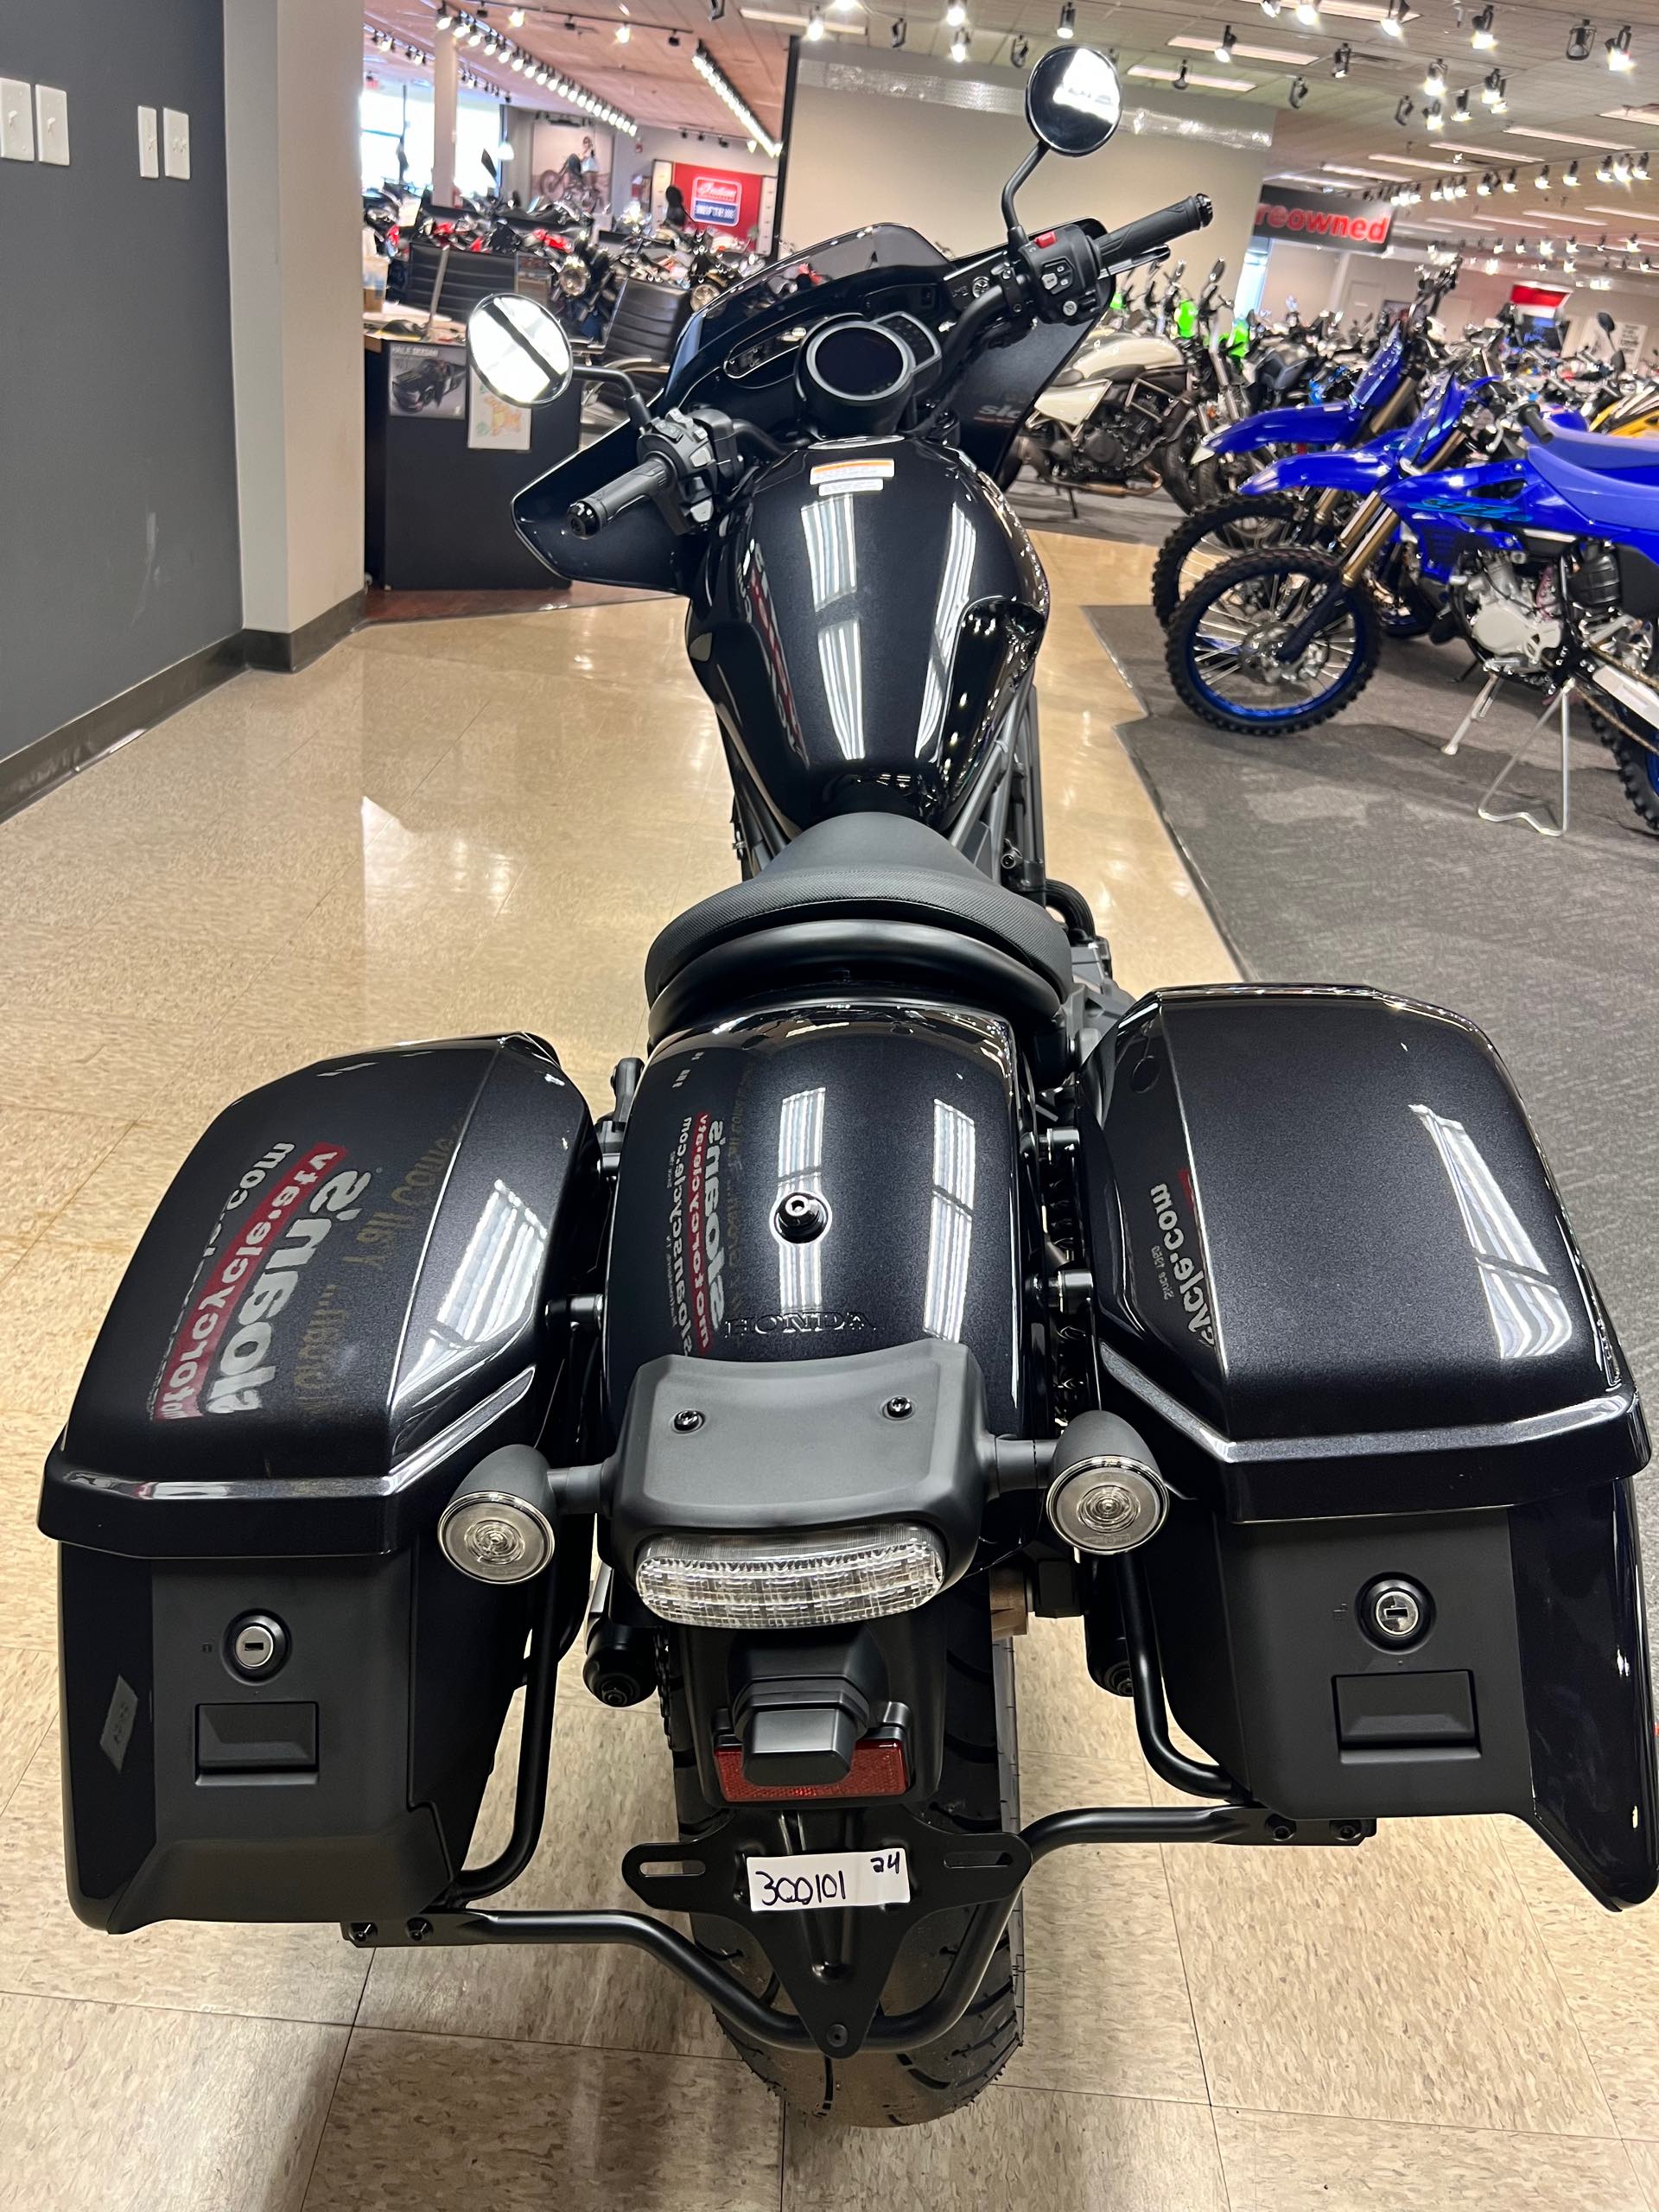 2024 Honda Rebel 1100T DCT at Sloans Motorcycle ATV, Murfreesboro, TN, 37129